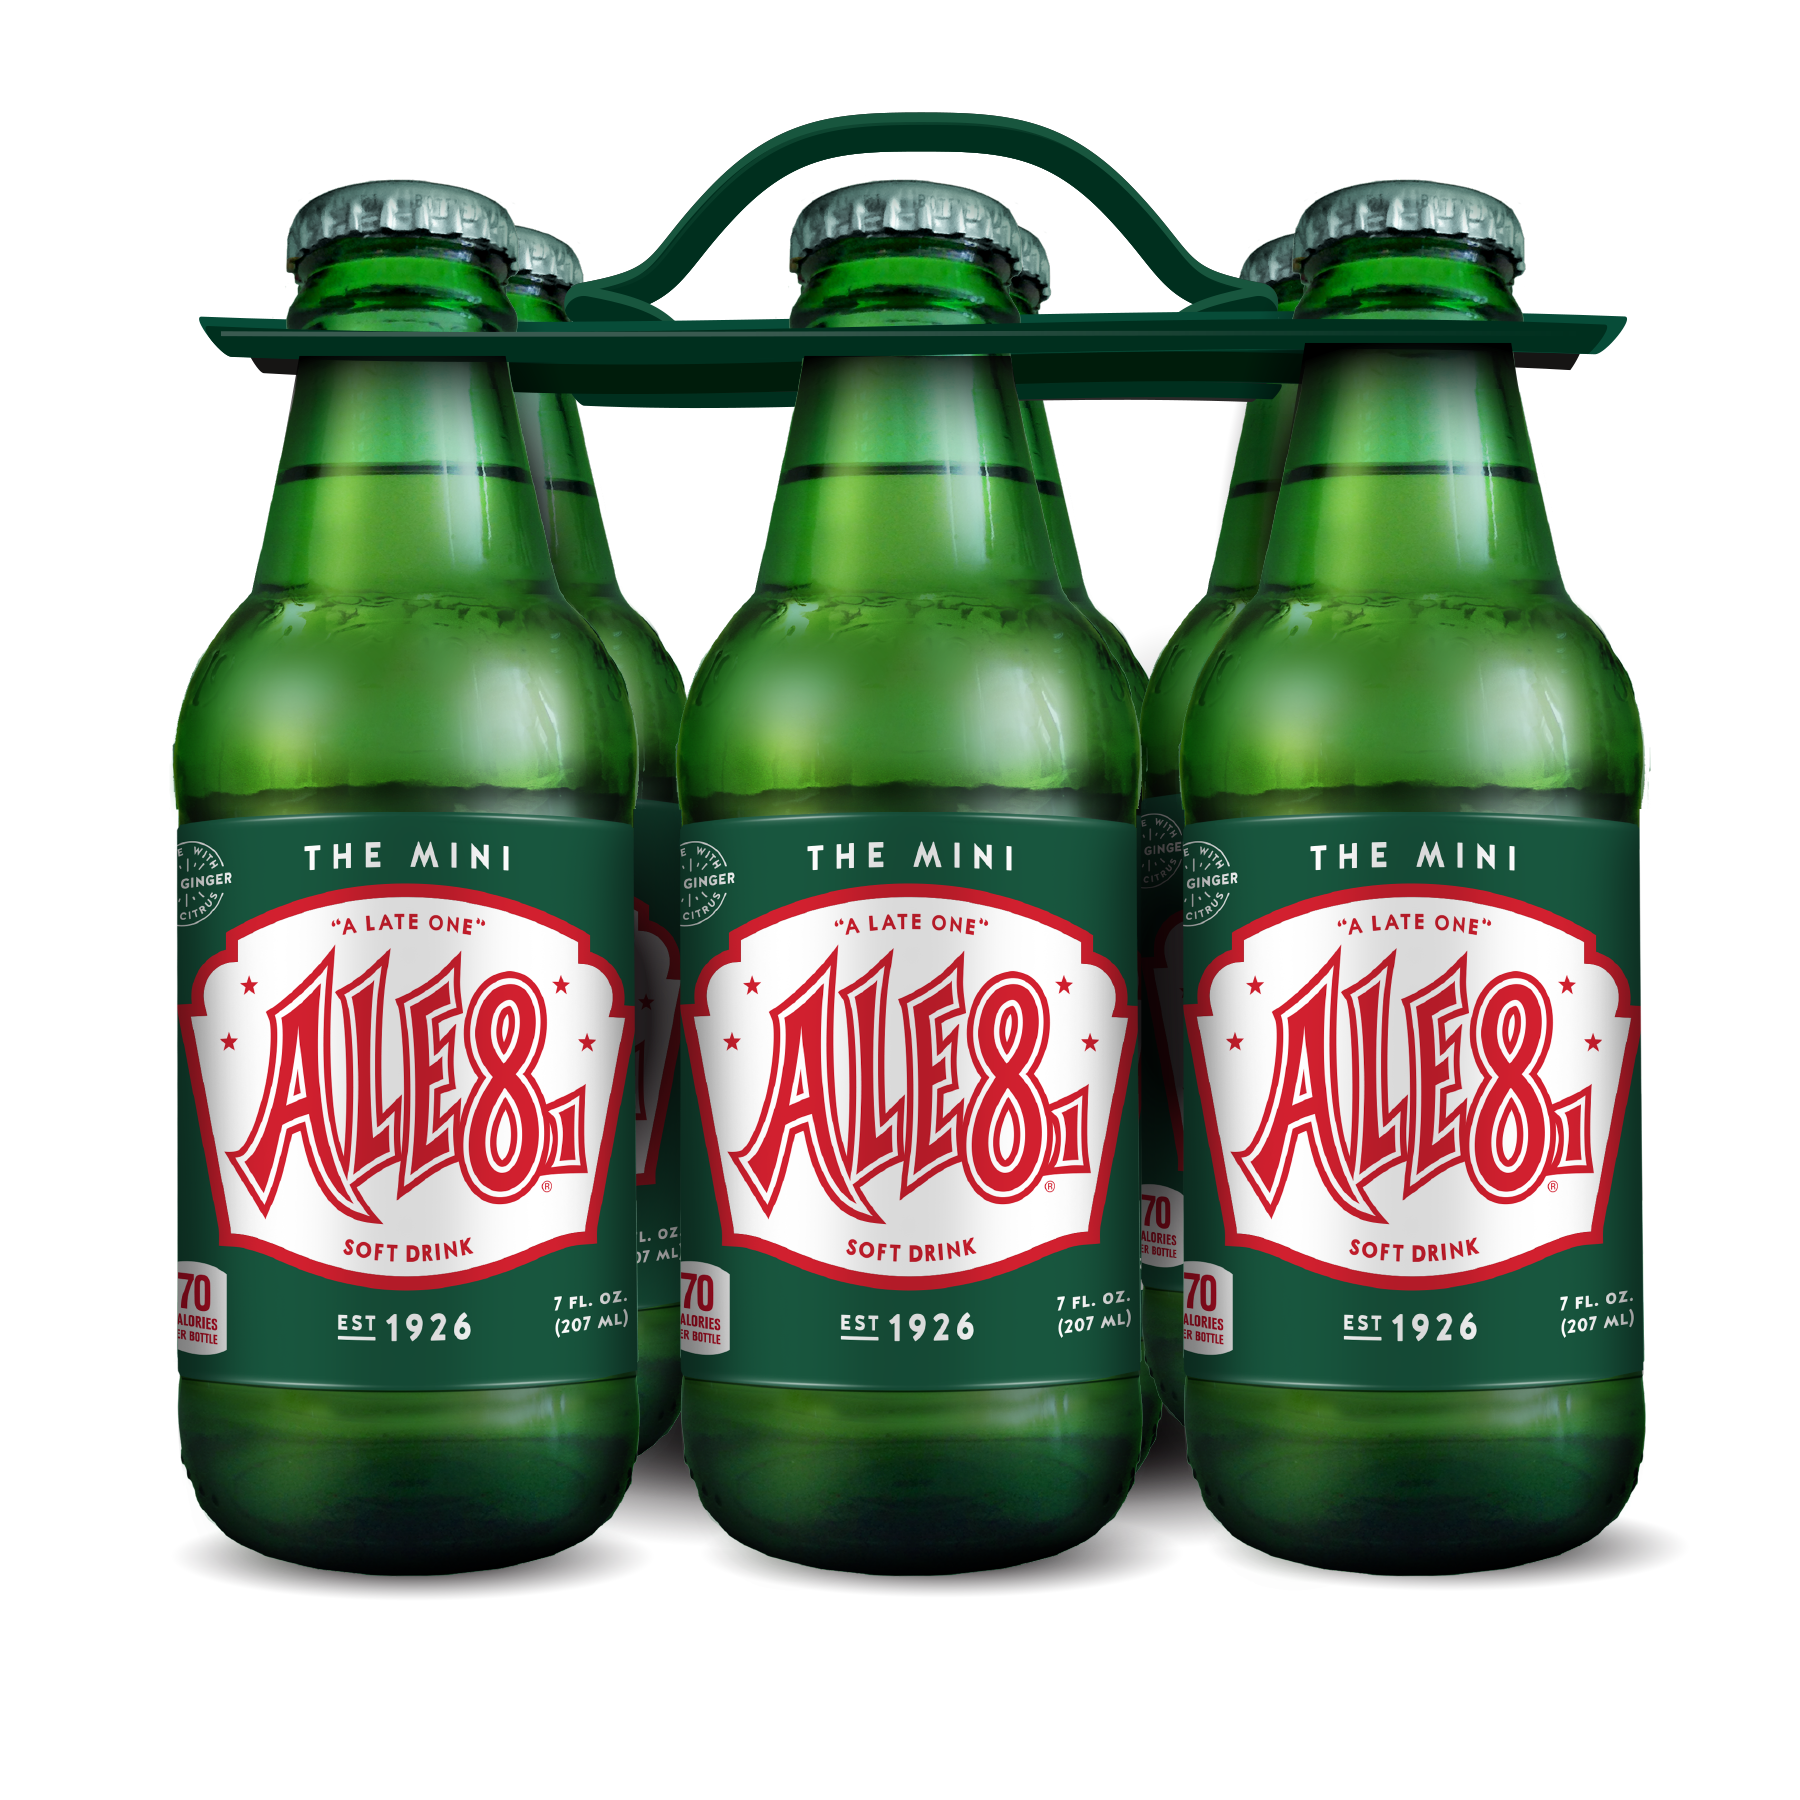 Ale-8-One Original Ginger Ale Mini Soda Pop, 7 fl oz, 6 Pack - image 1 of 3